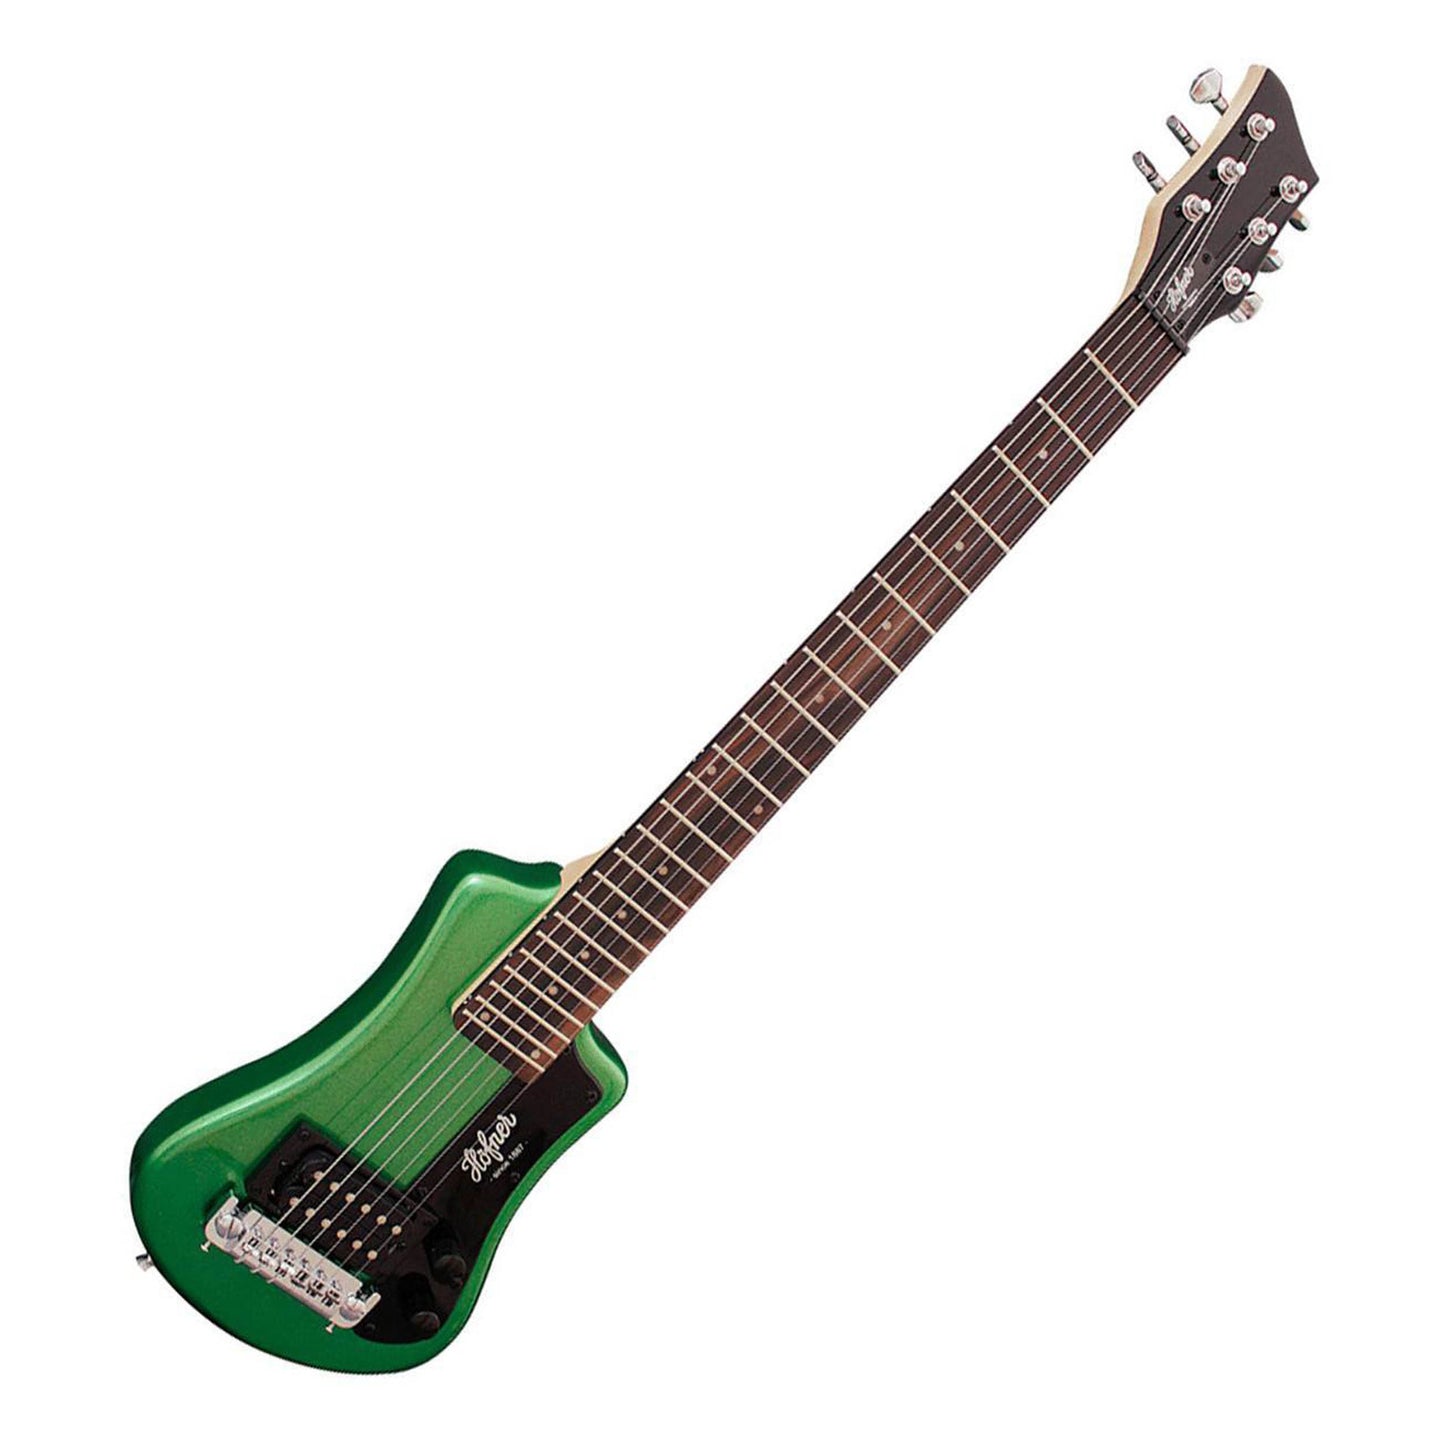 Hofner Shorty Travel Electric Guitar in Green Metallic